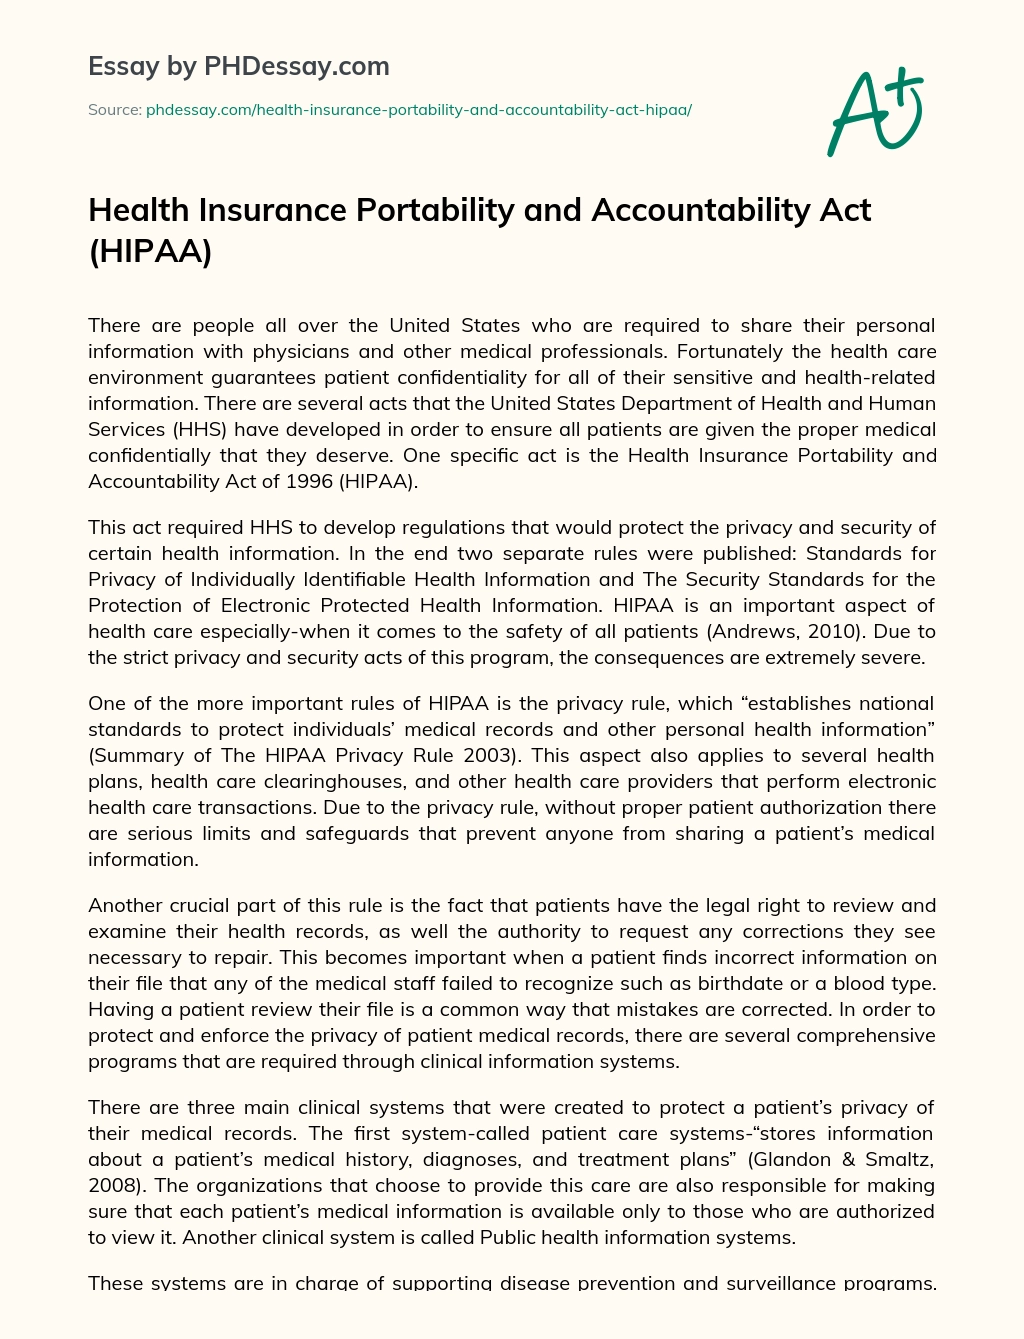 Health Insurance Portability and Accountability Act (HIPAA) essay